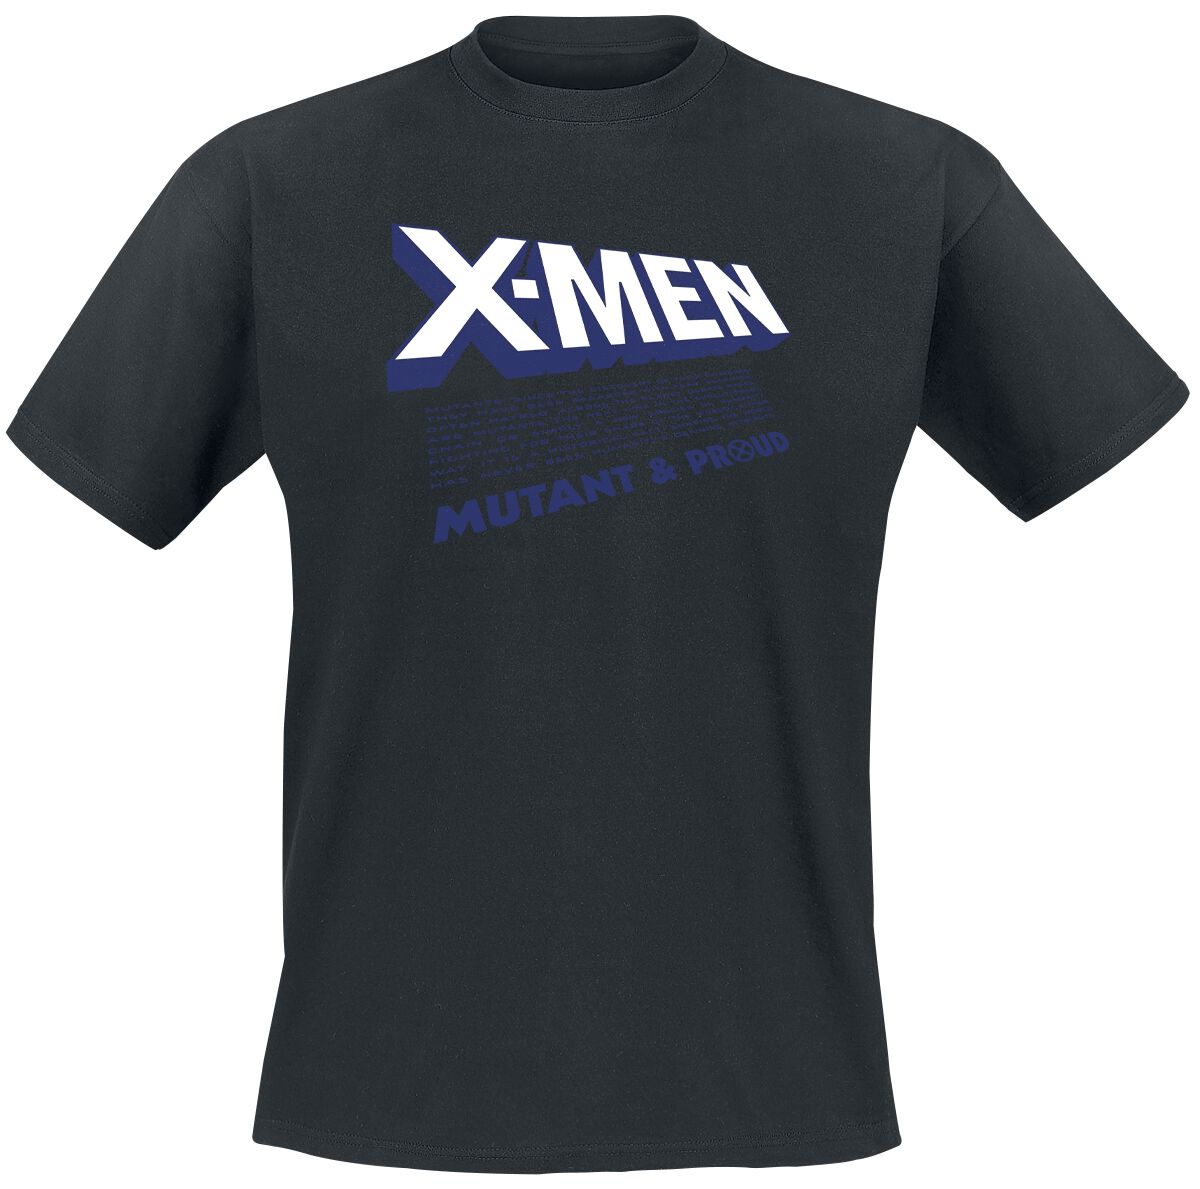 X-Men Mutant and proud T-Shirt black